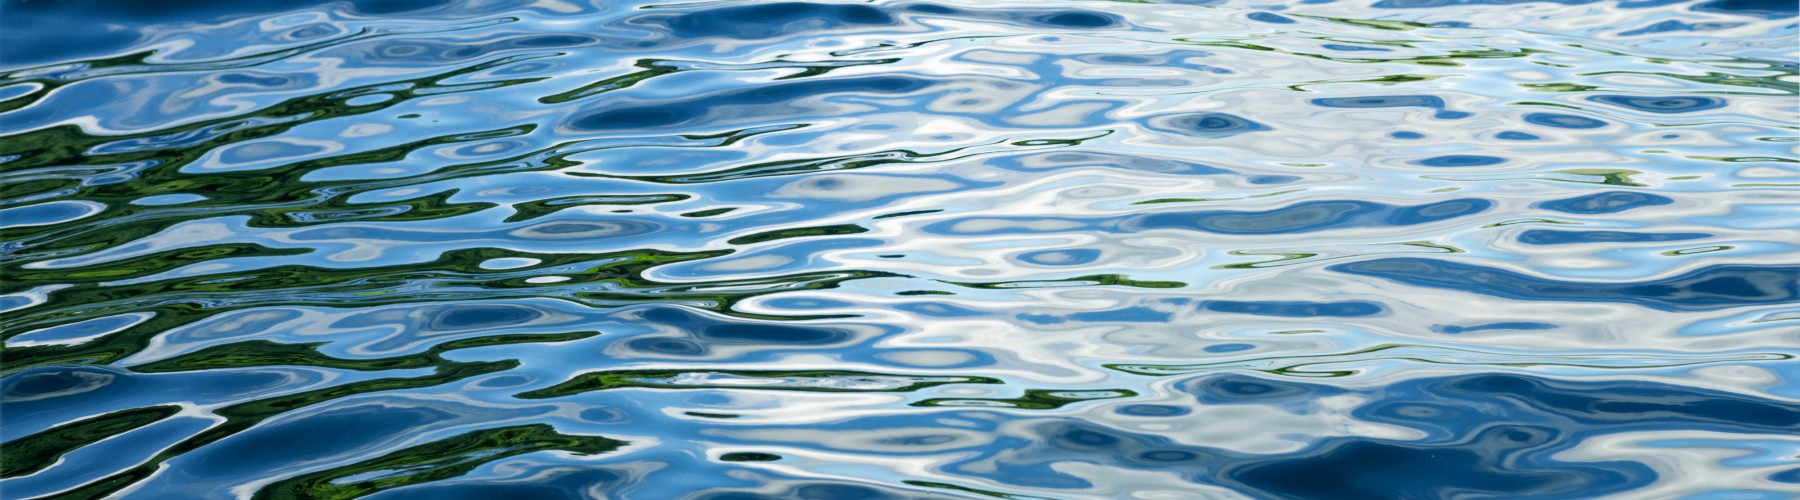 Undulating waves of pure water reflecting light patterns.